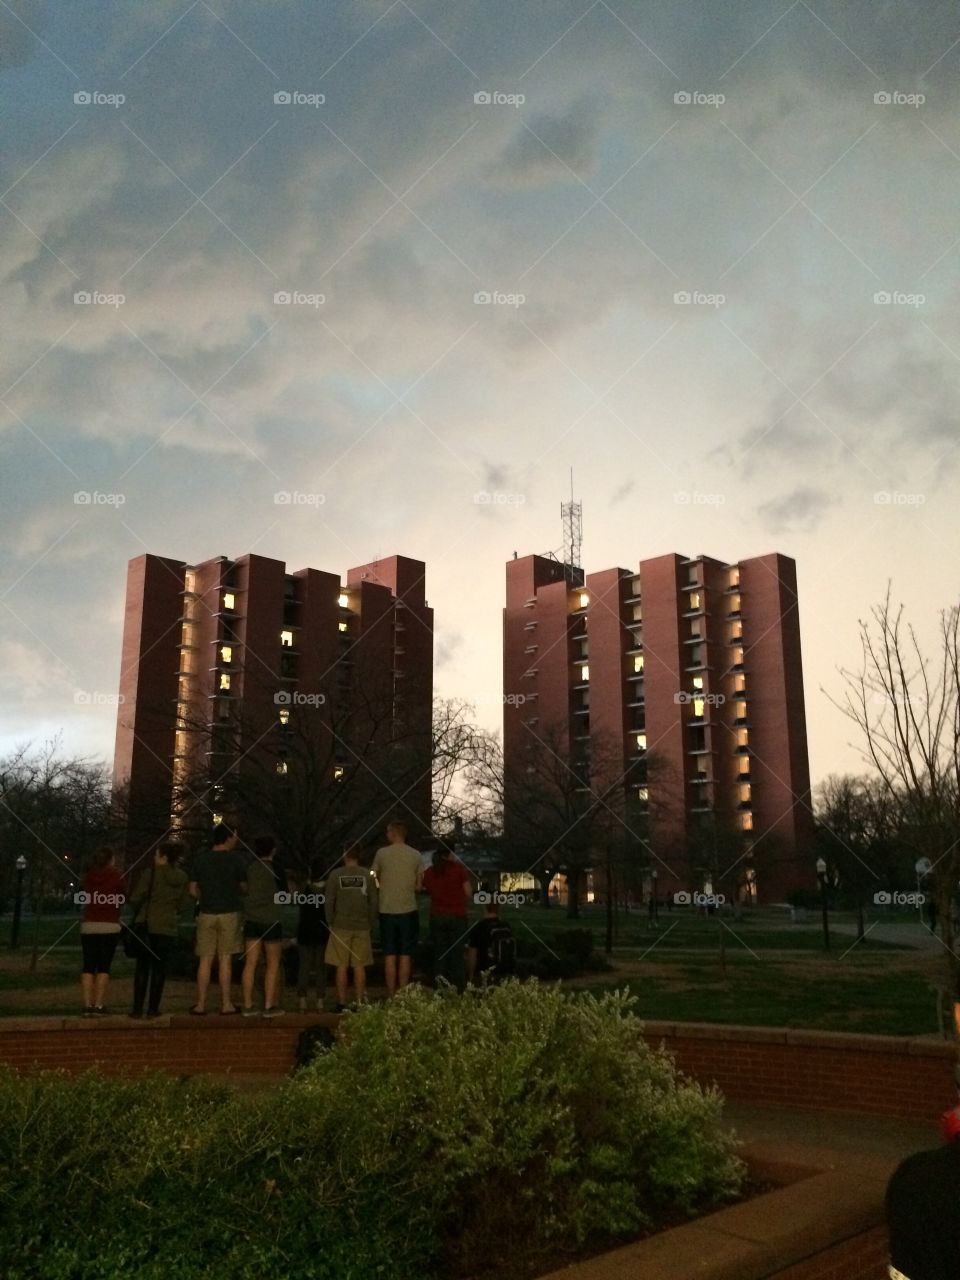 Sooner Storm. A thunderstorm at the University of Oklahoma. 